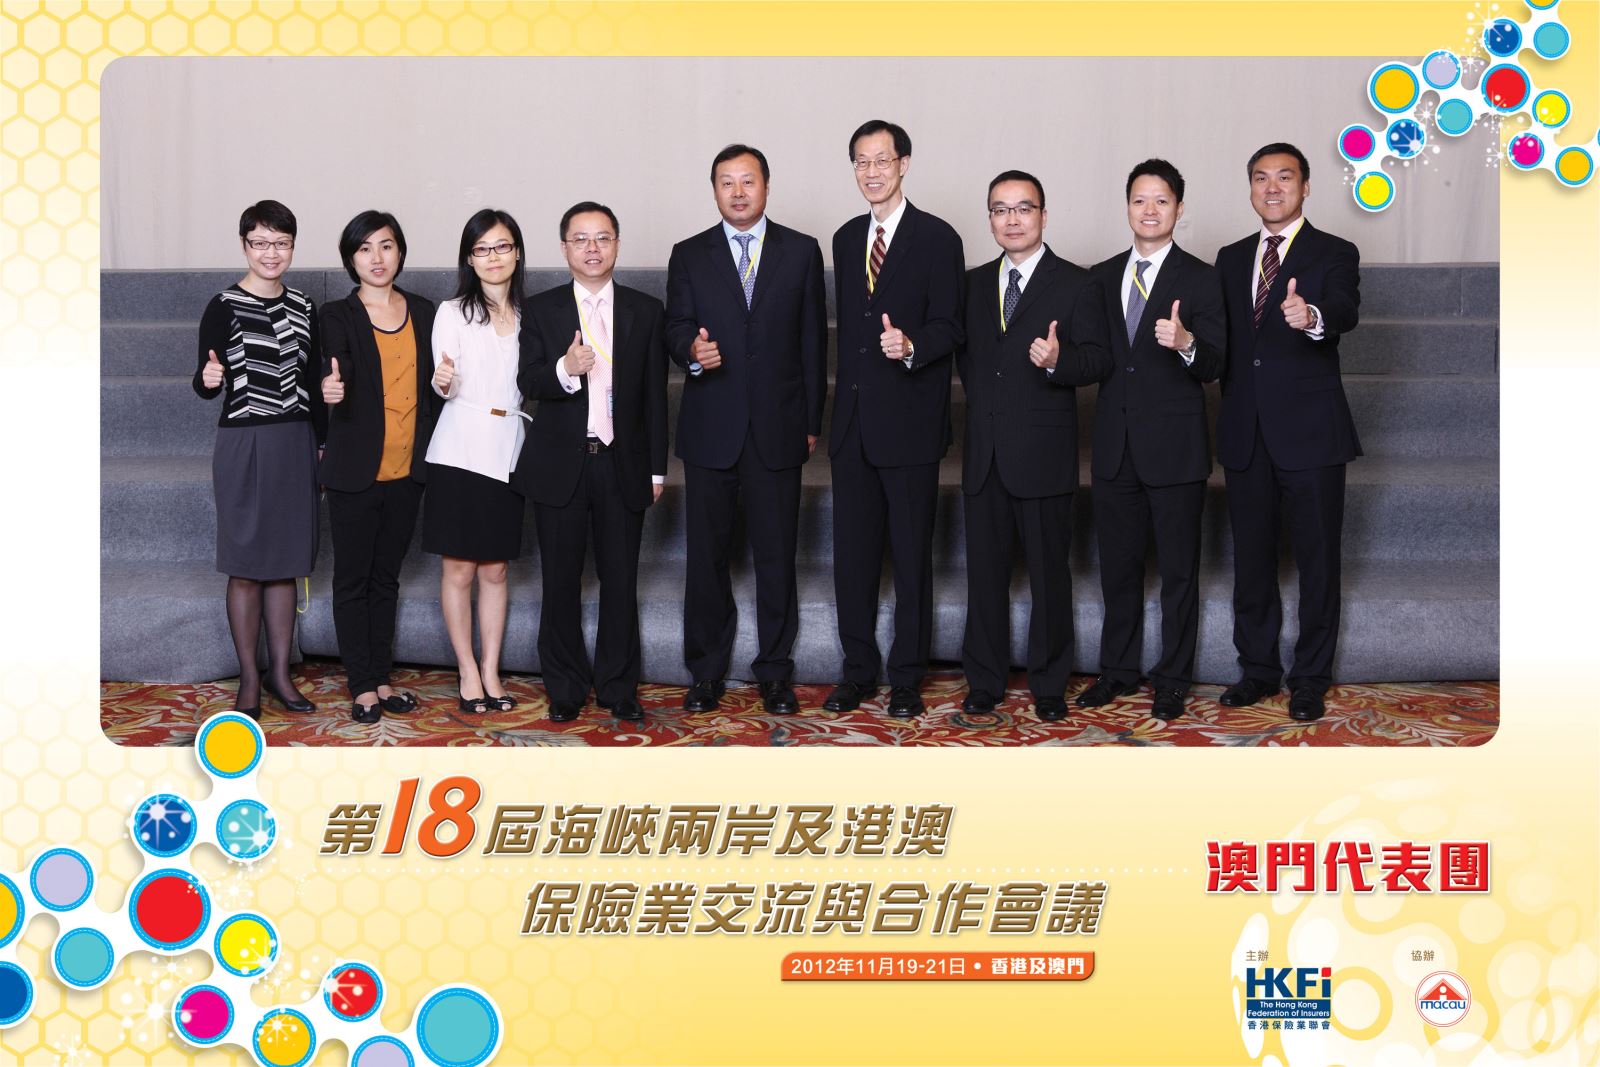 18th Cross-strait, Hong Kong & Macau Insurance Business Conference - Group Photos